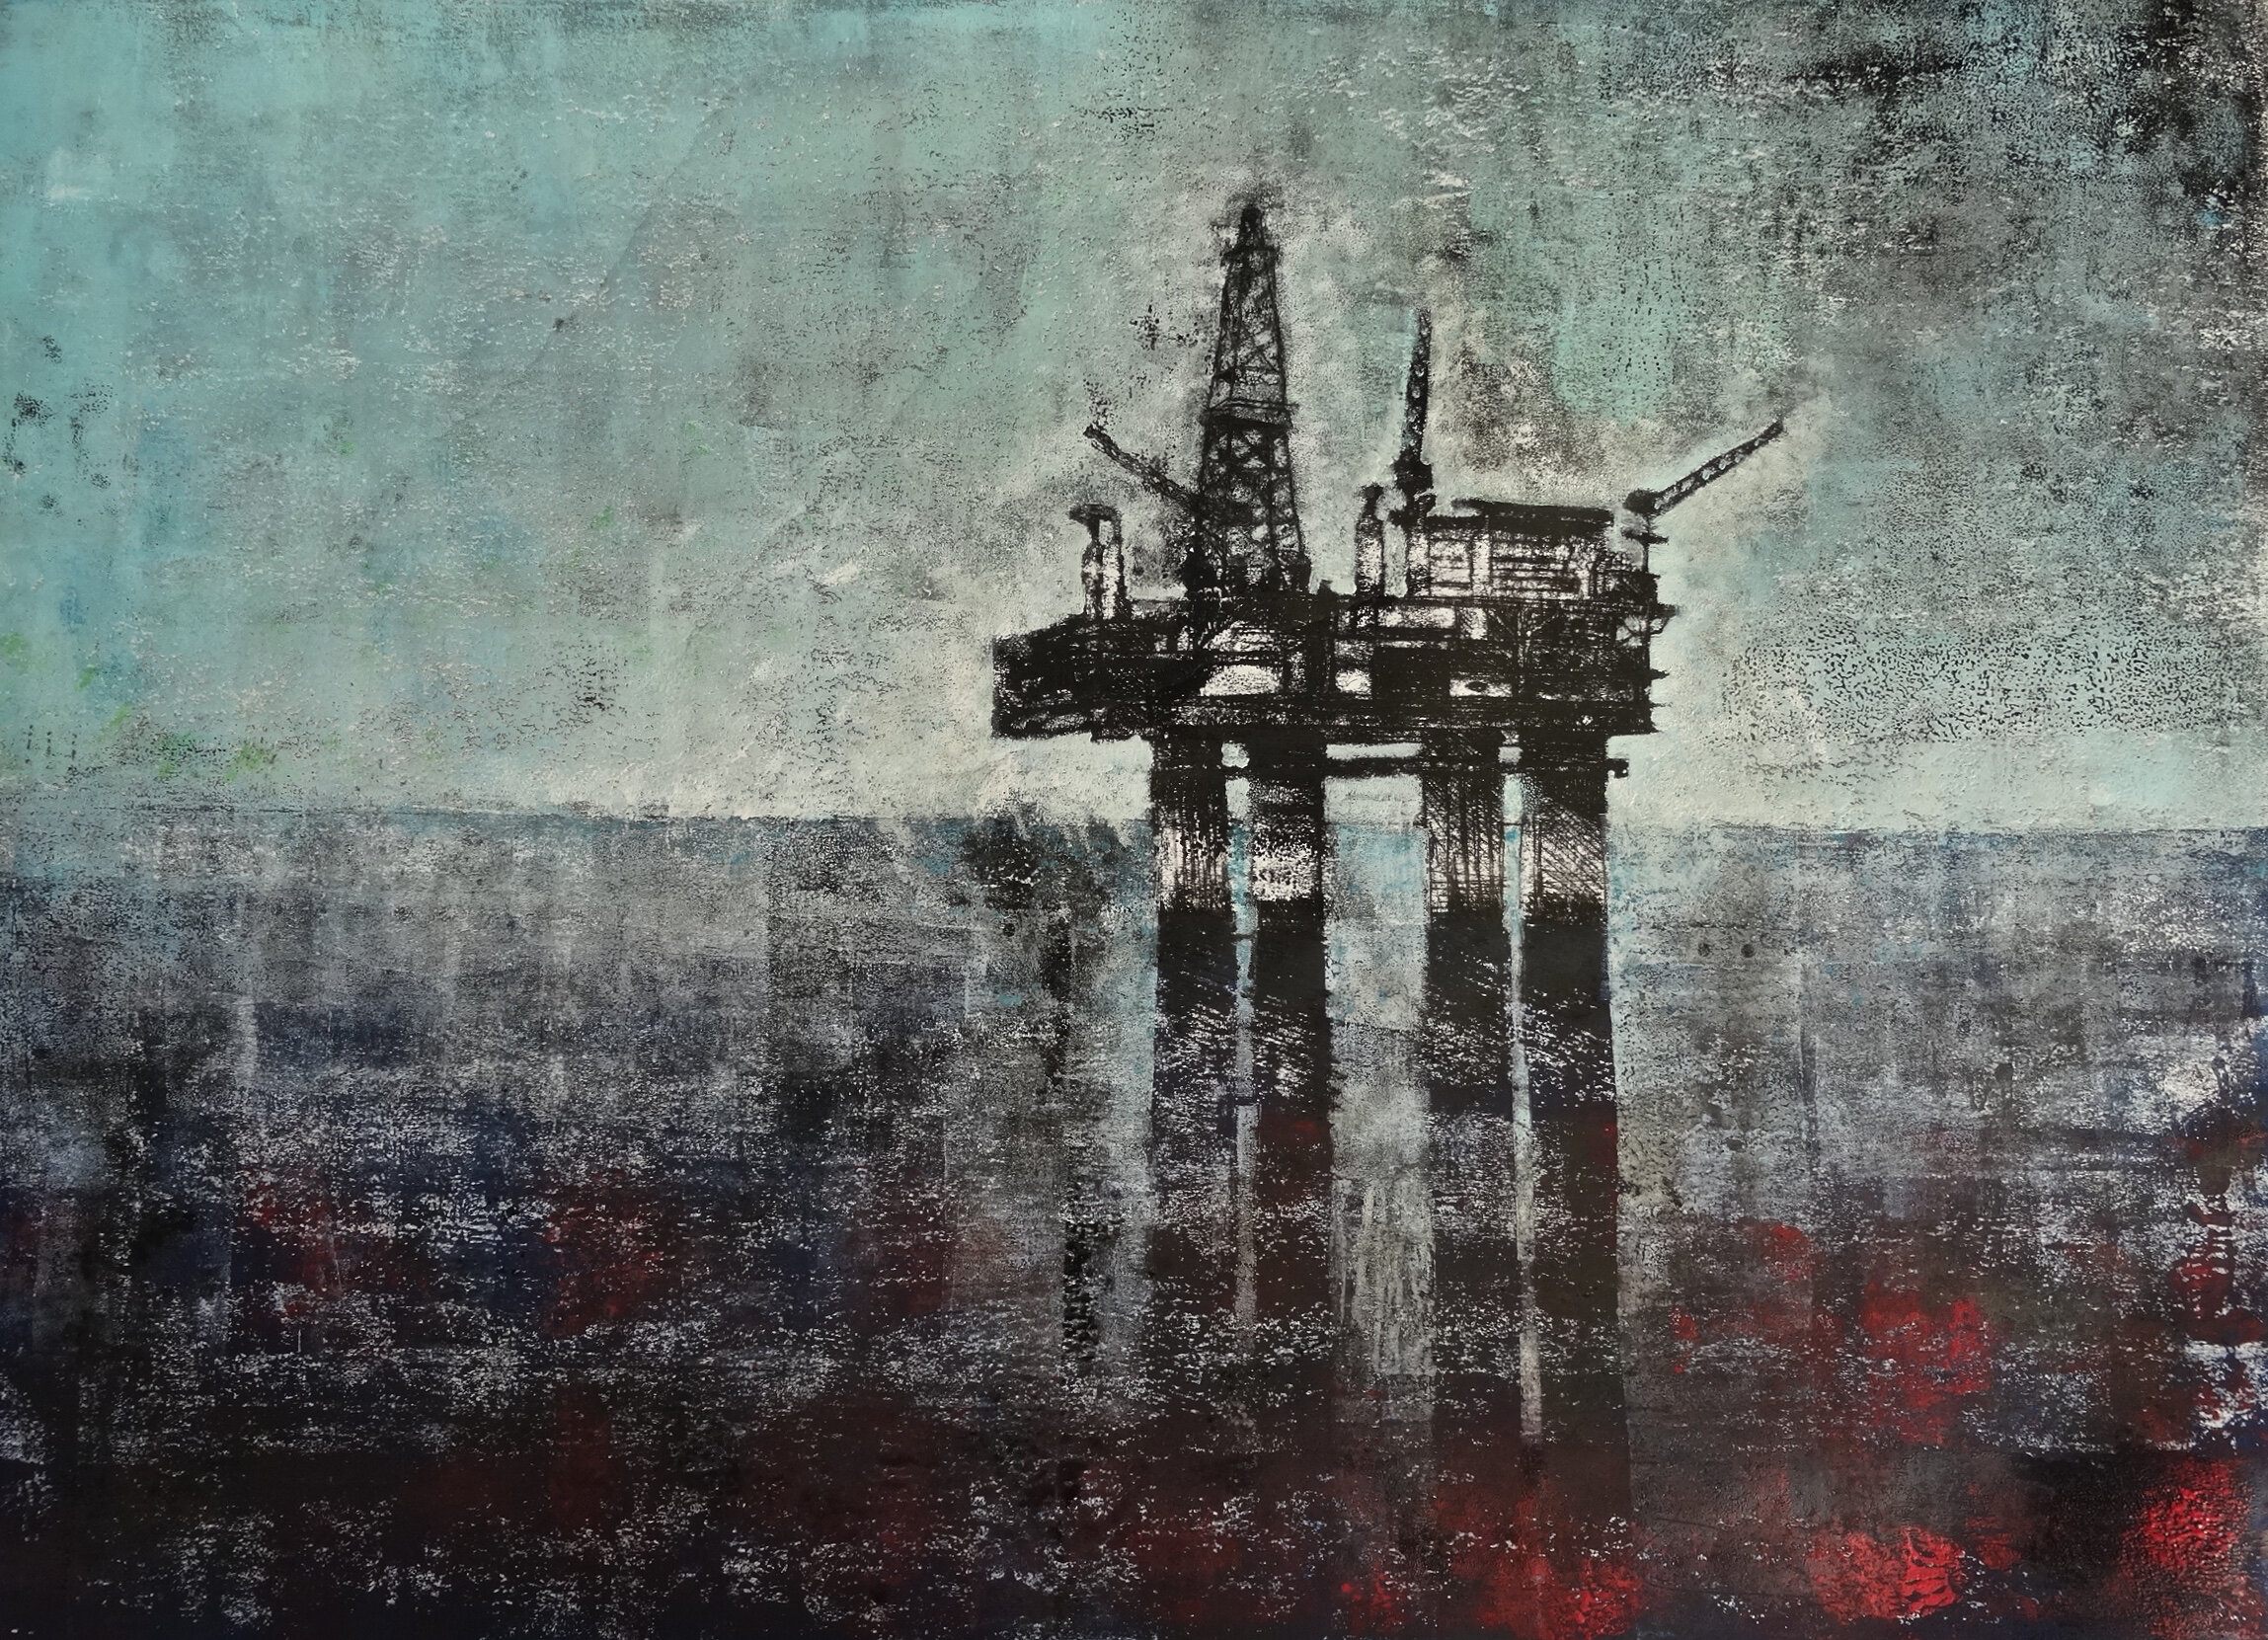 Oil Rig 1. 70x90cm. G.Bown.jpg